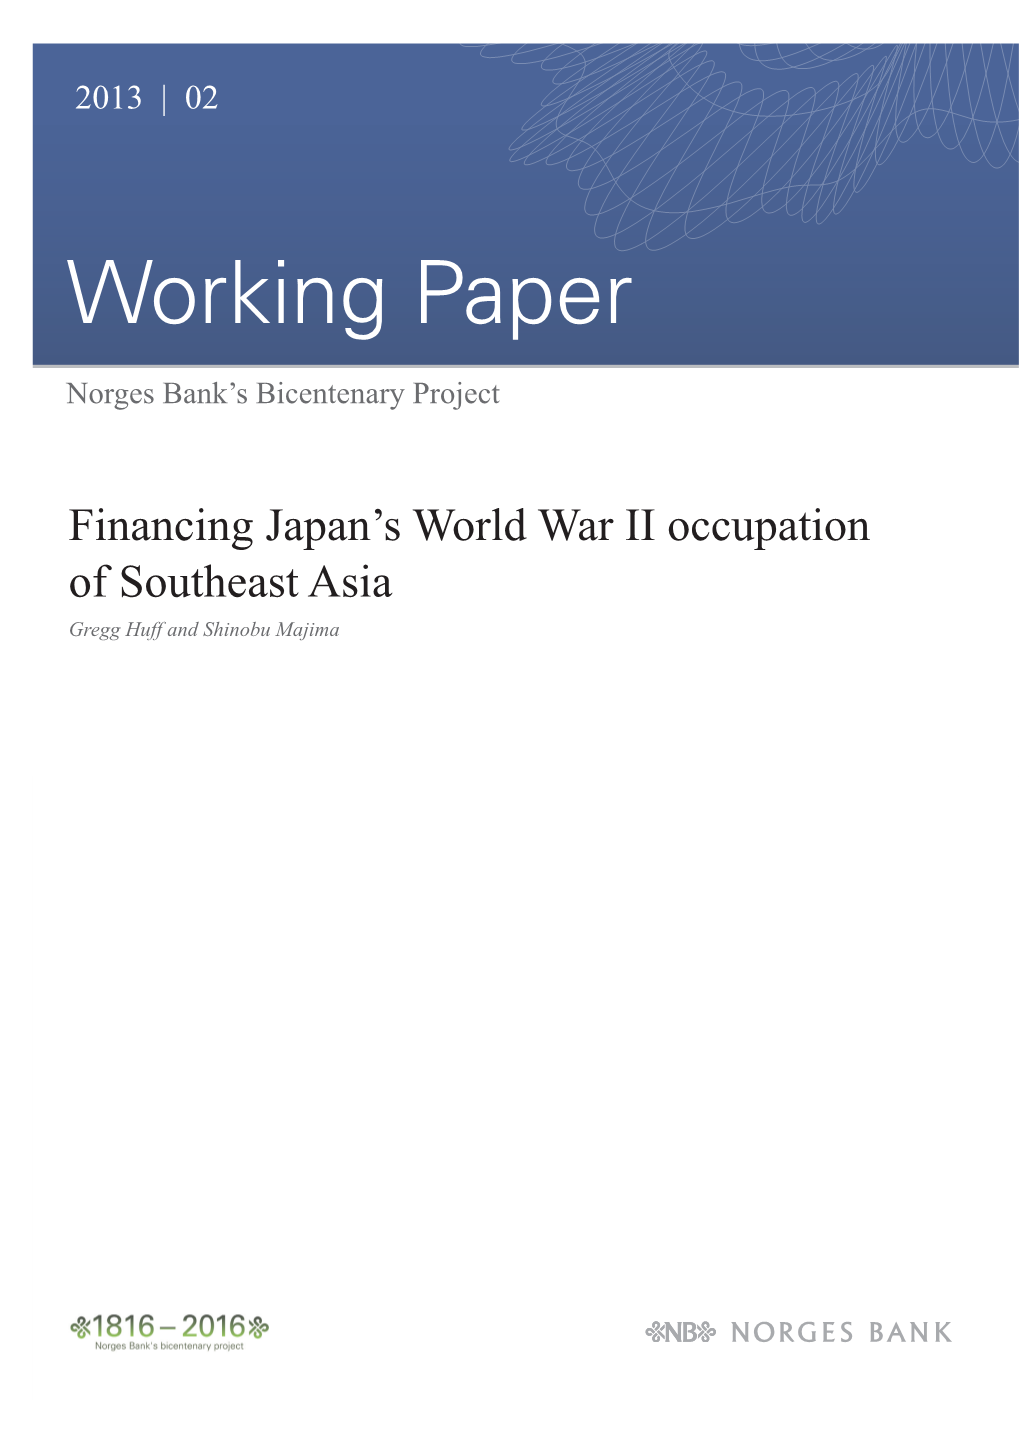 Financing Japan's World War II Occupation of Southeast Asia. Gregg Huff and Shinobu Majima (Norges Bank Working Paper 2013/0